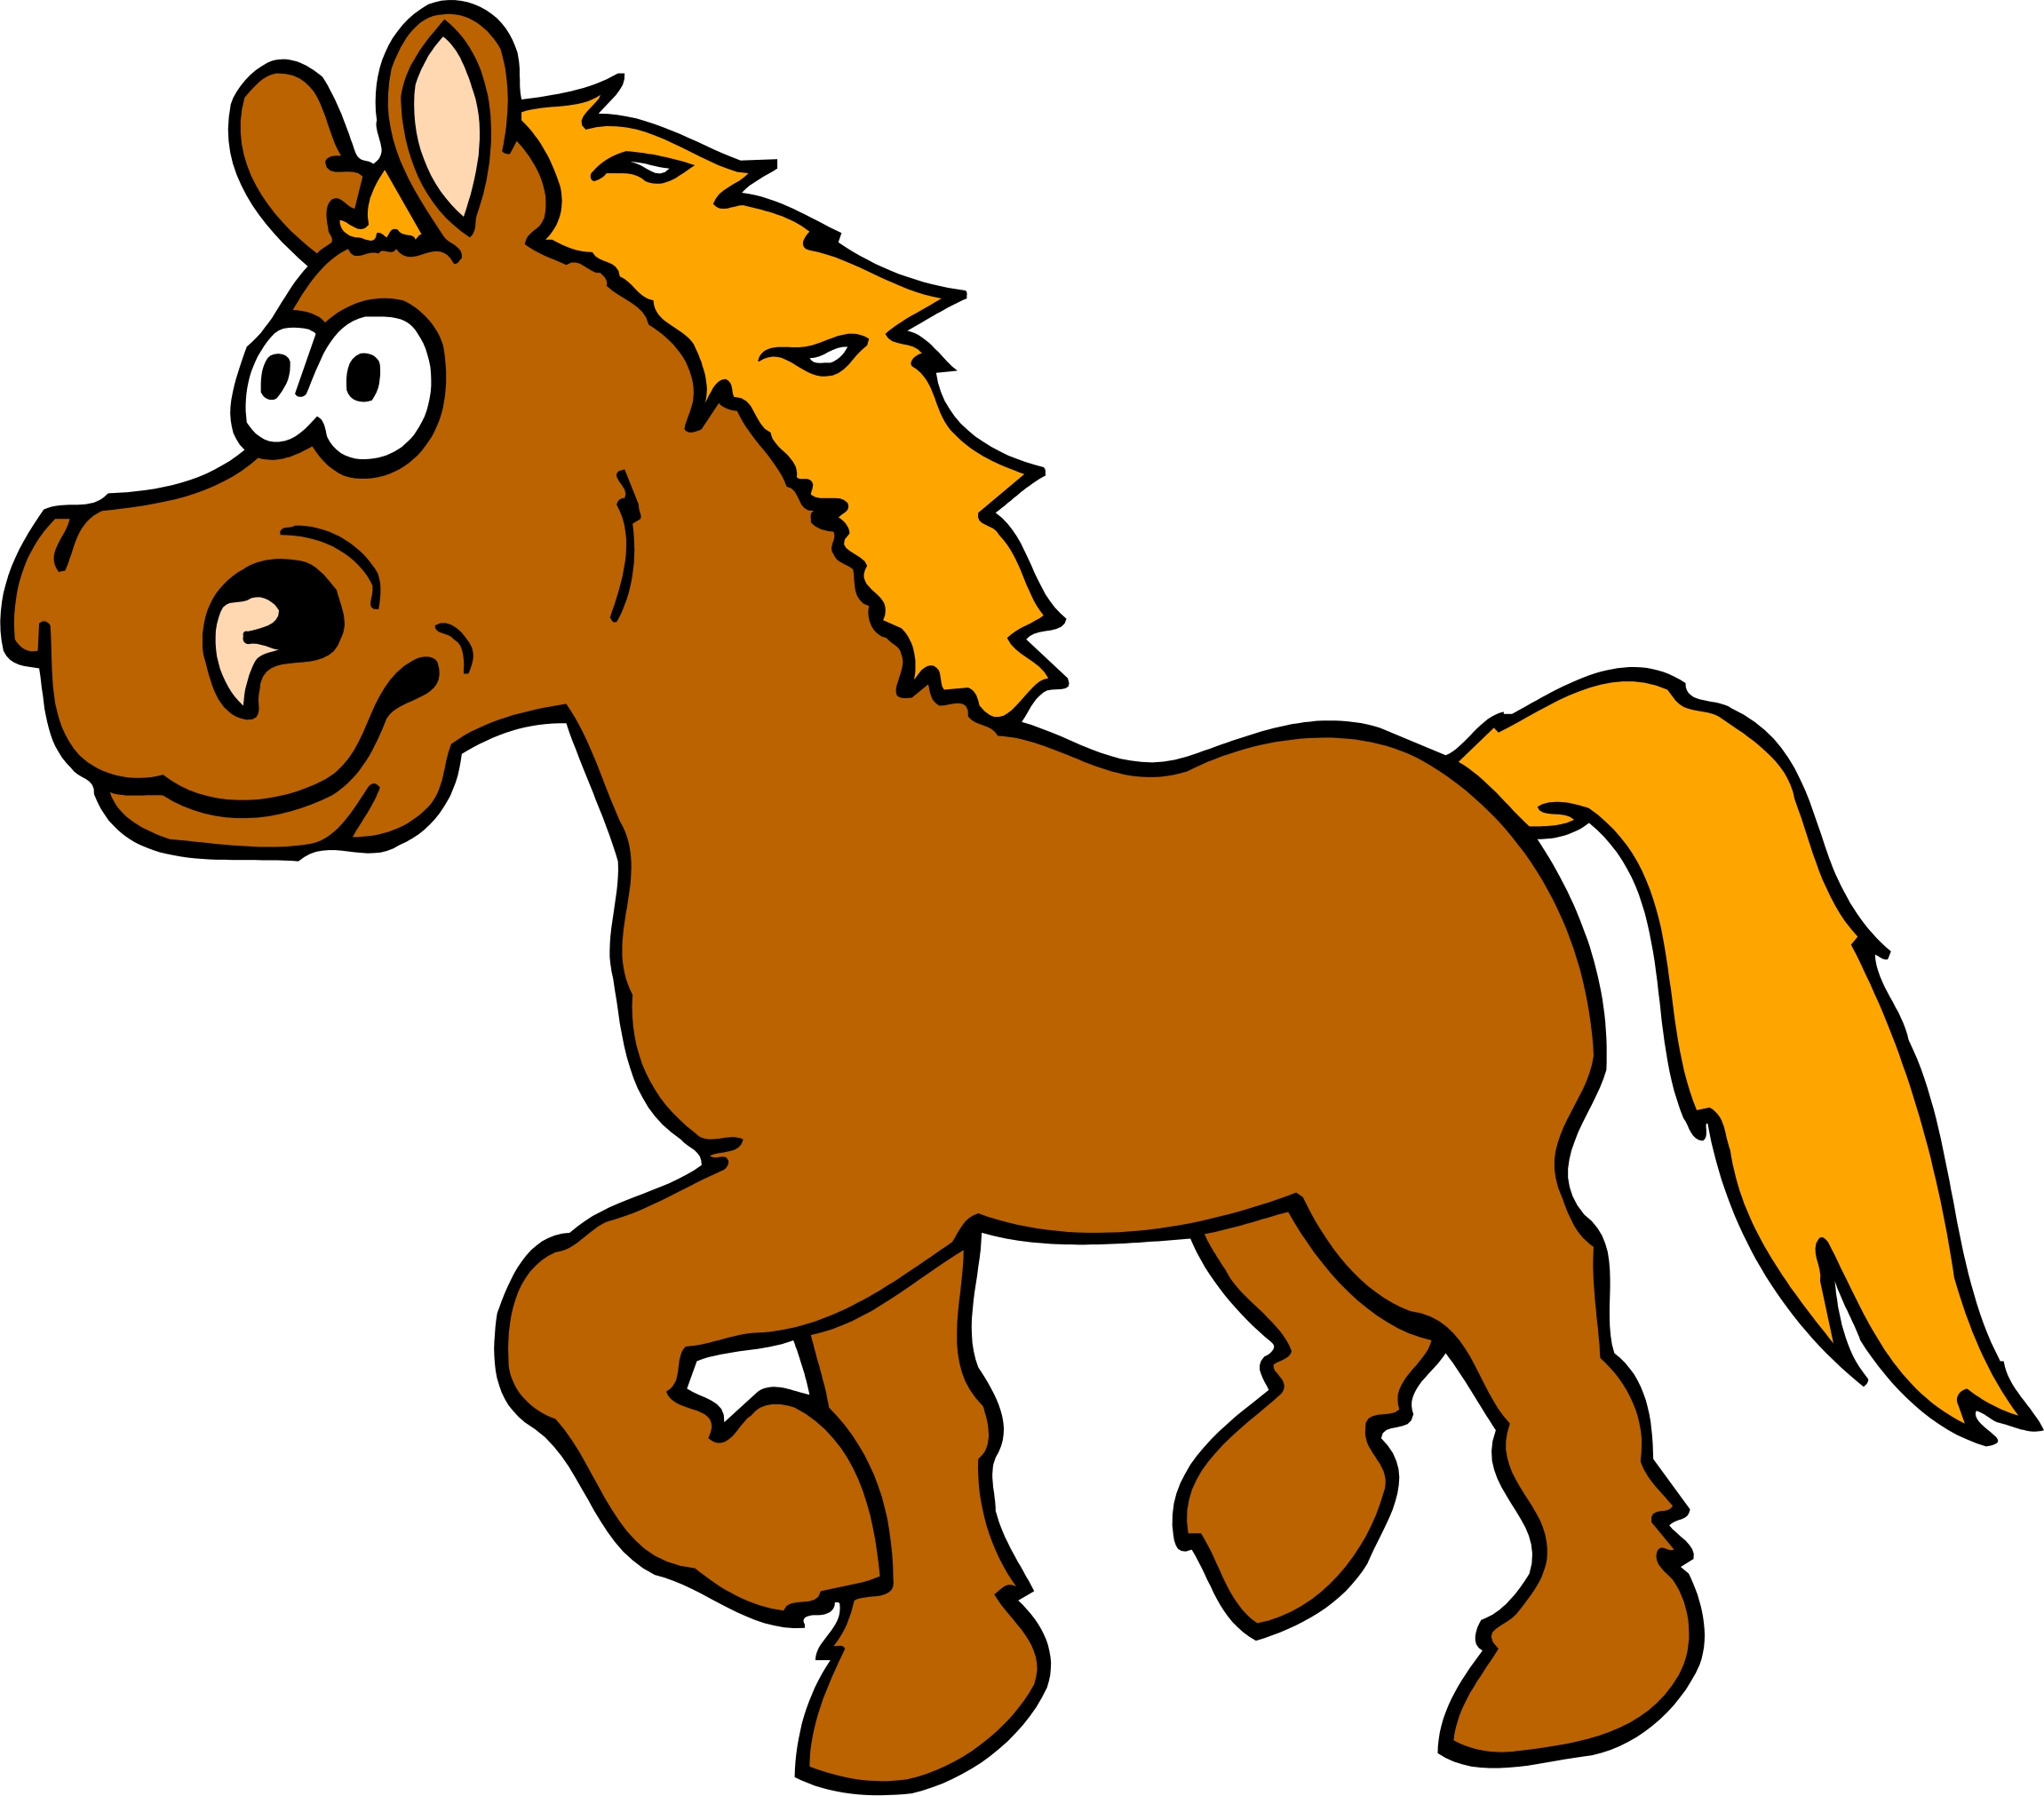 Free Cartoon Horses Images, Download Free Cartoon Horses Images png